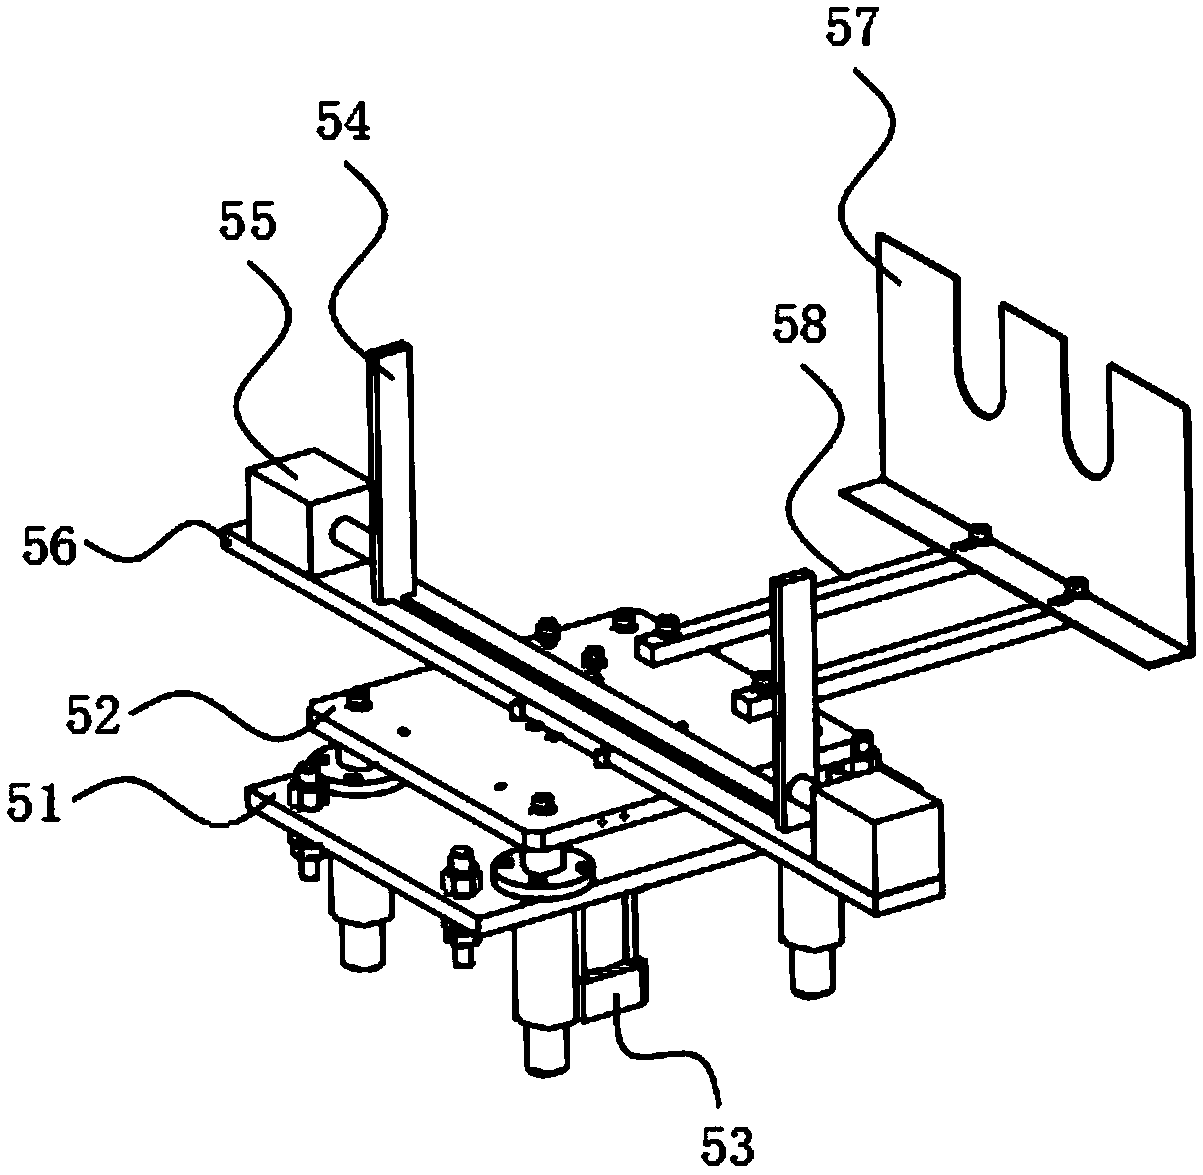 High-precision horizontal board placing machine